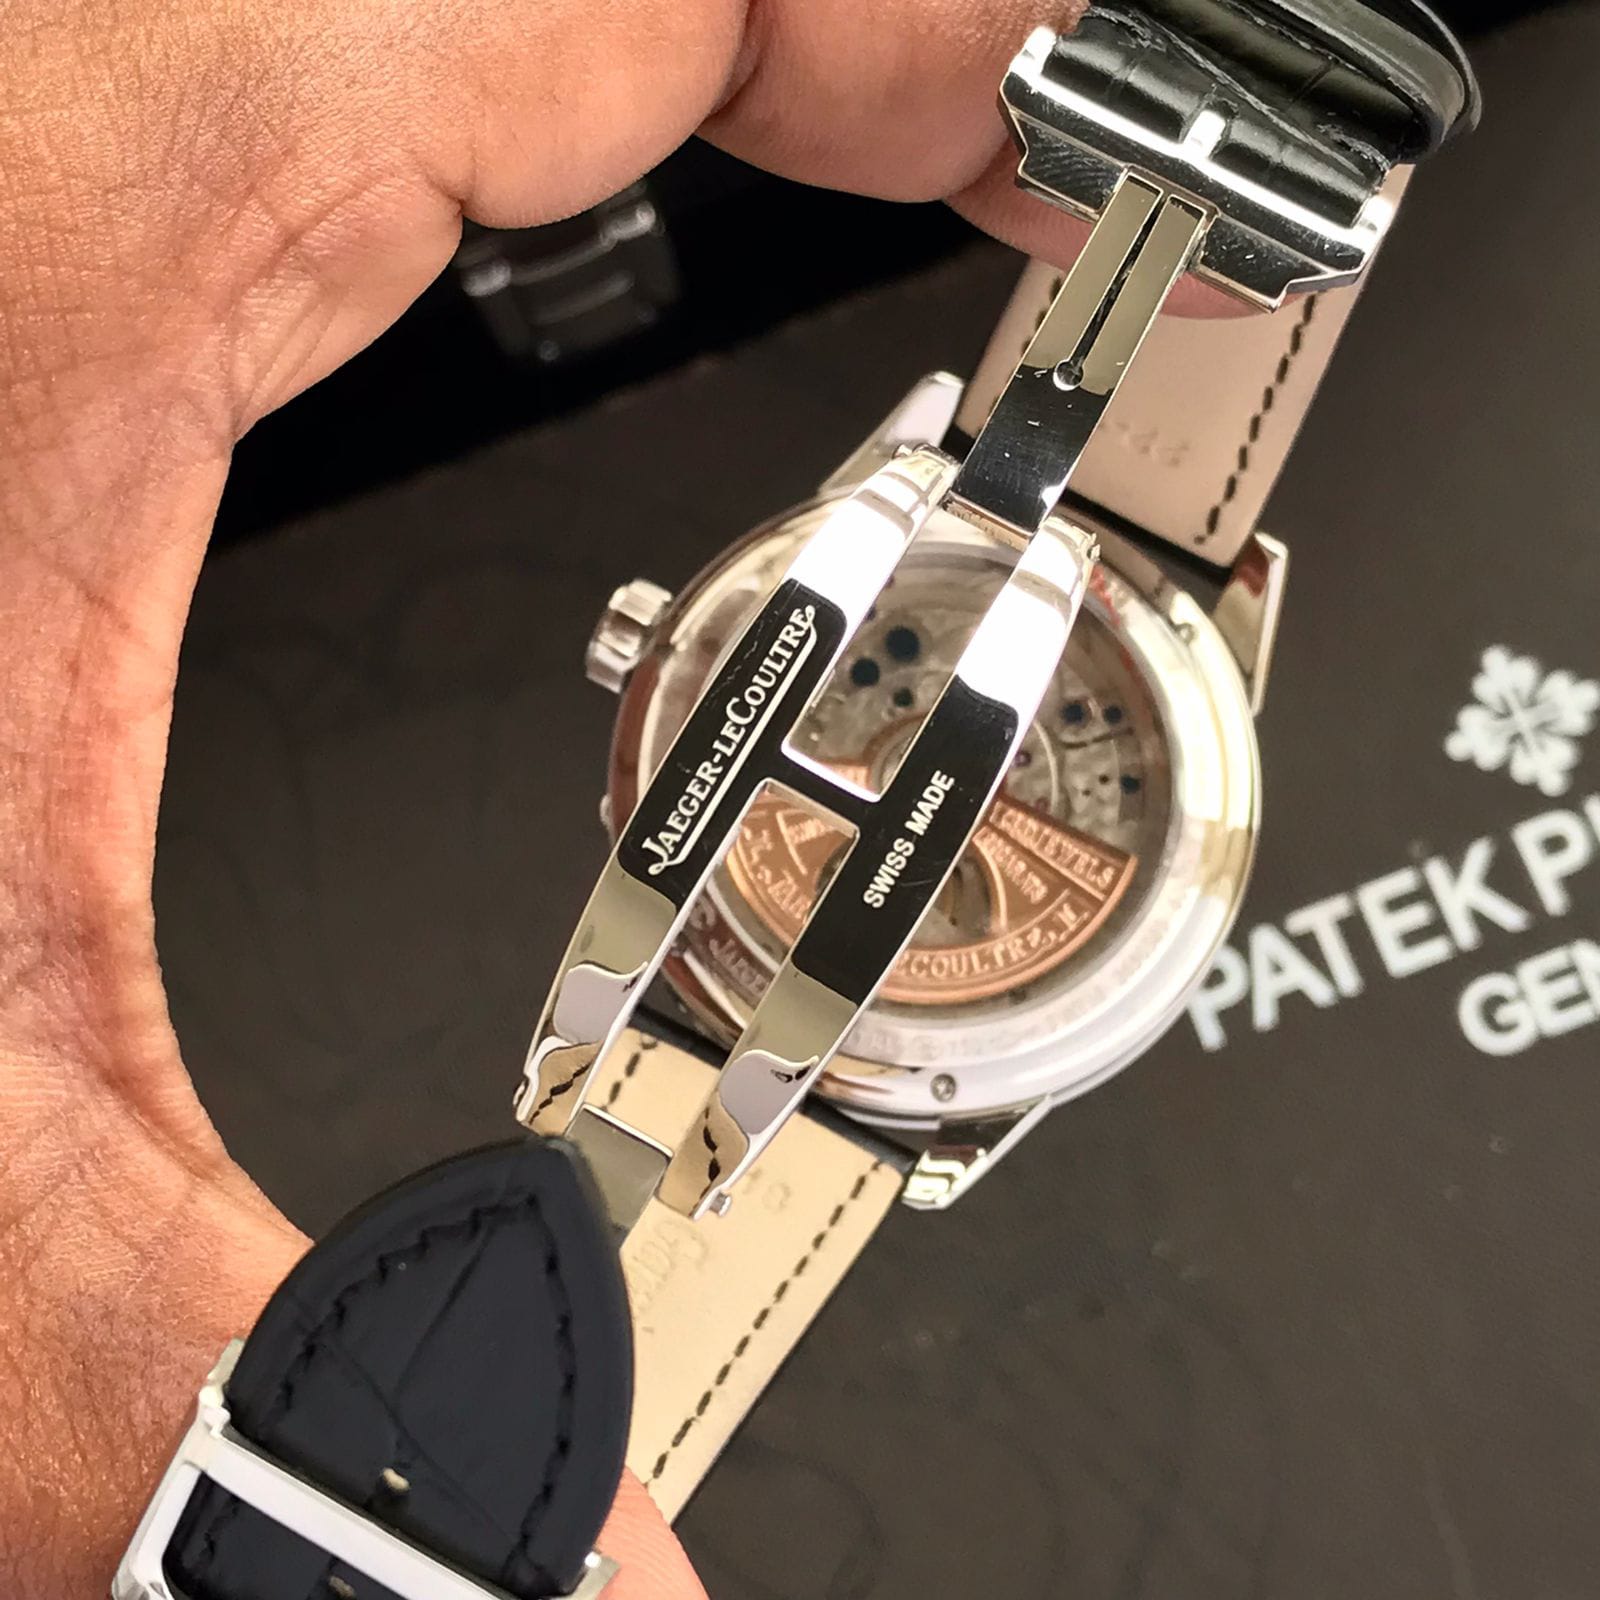 Amazing Jaeger-LeCoultre watch - AmazingBaba